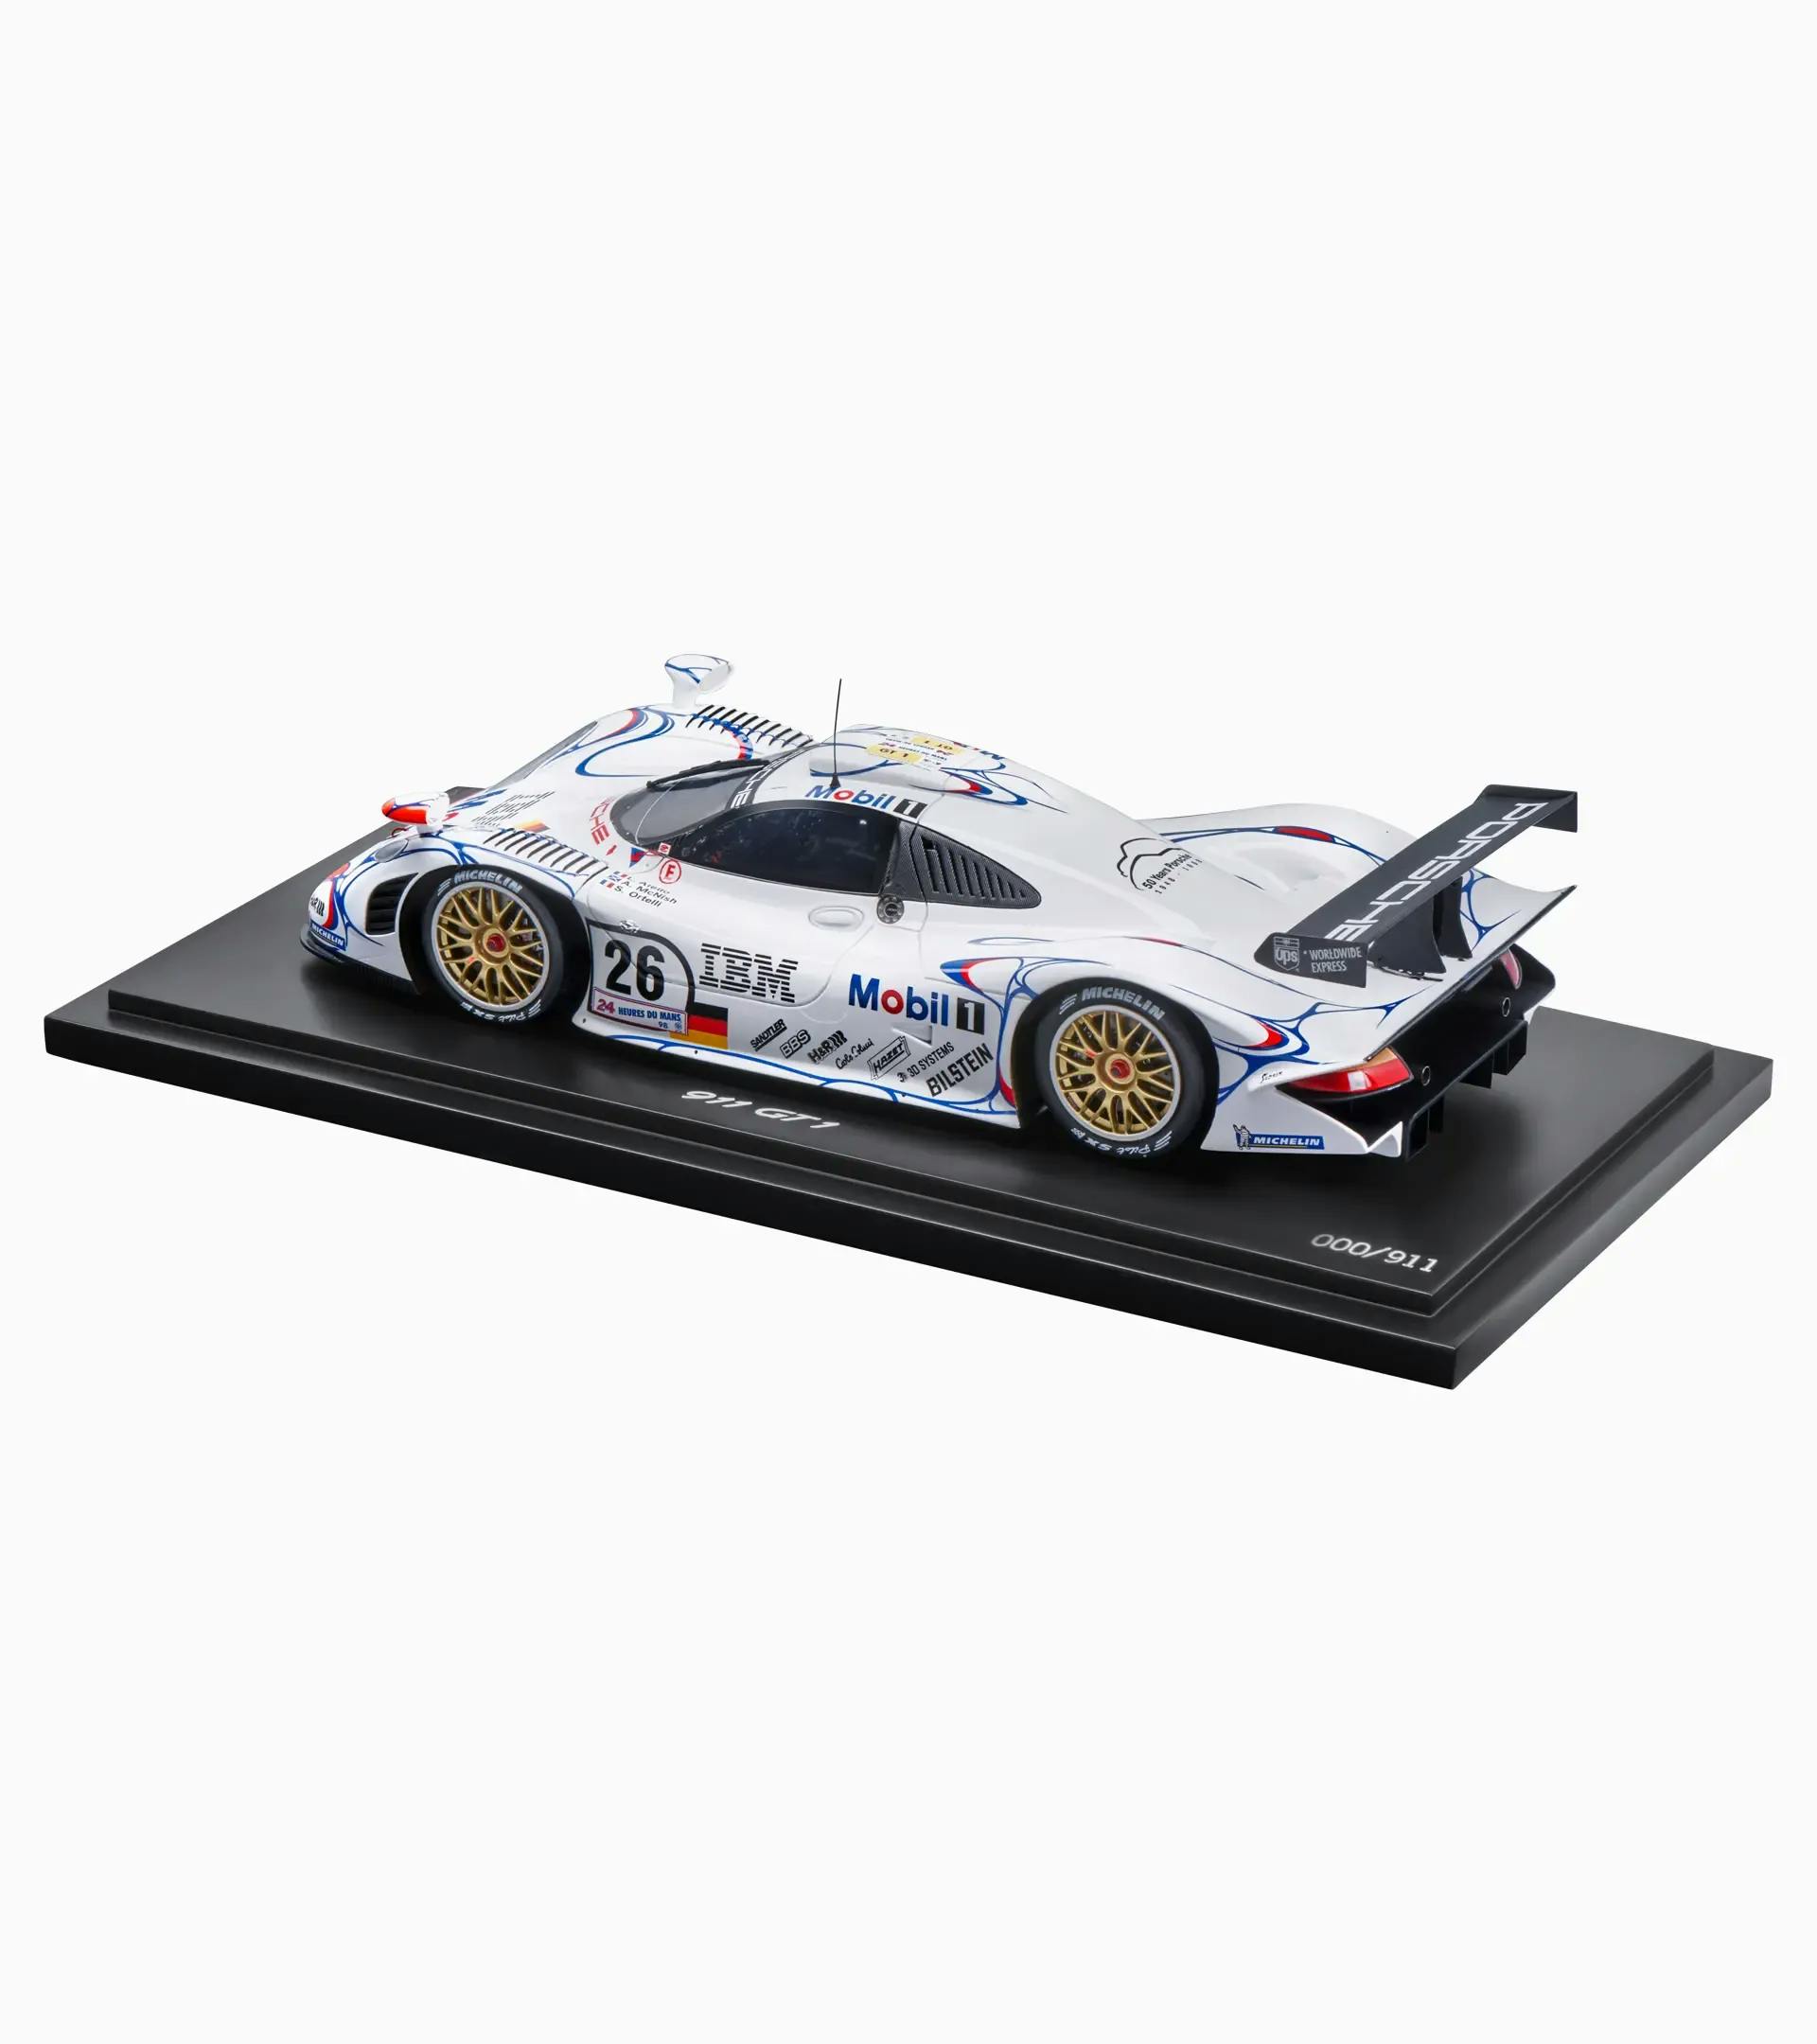 Porsche 911 GT1'98 vincitrice della 24h di Le Mans 1998 – Ltd.  2